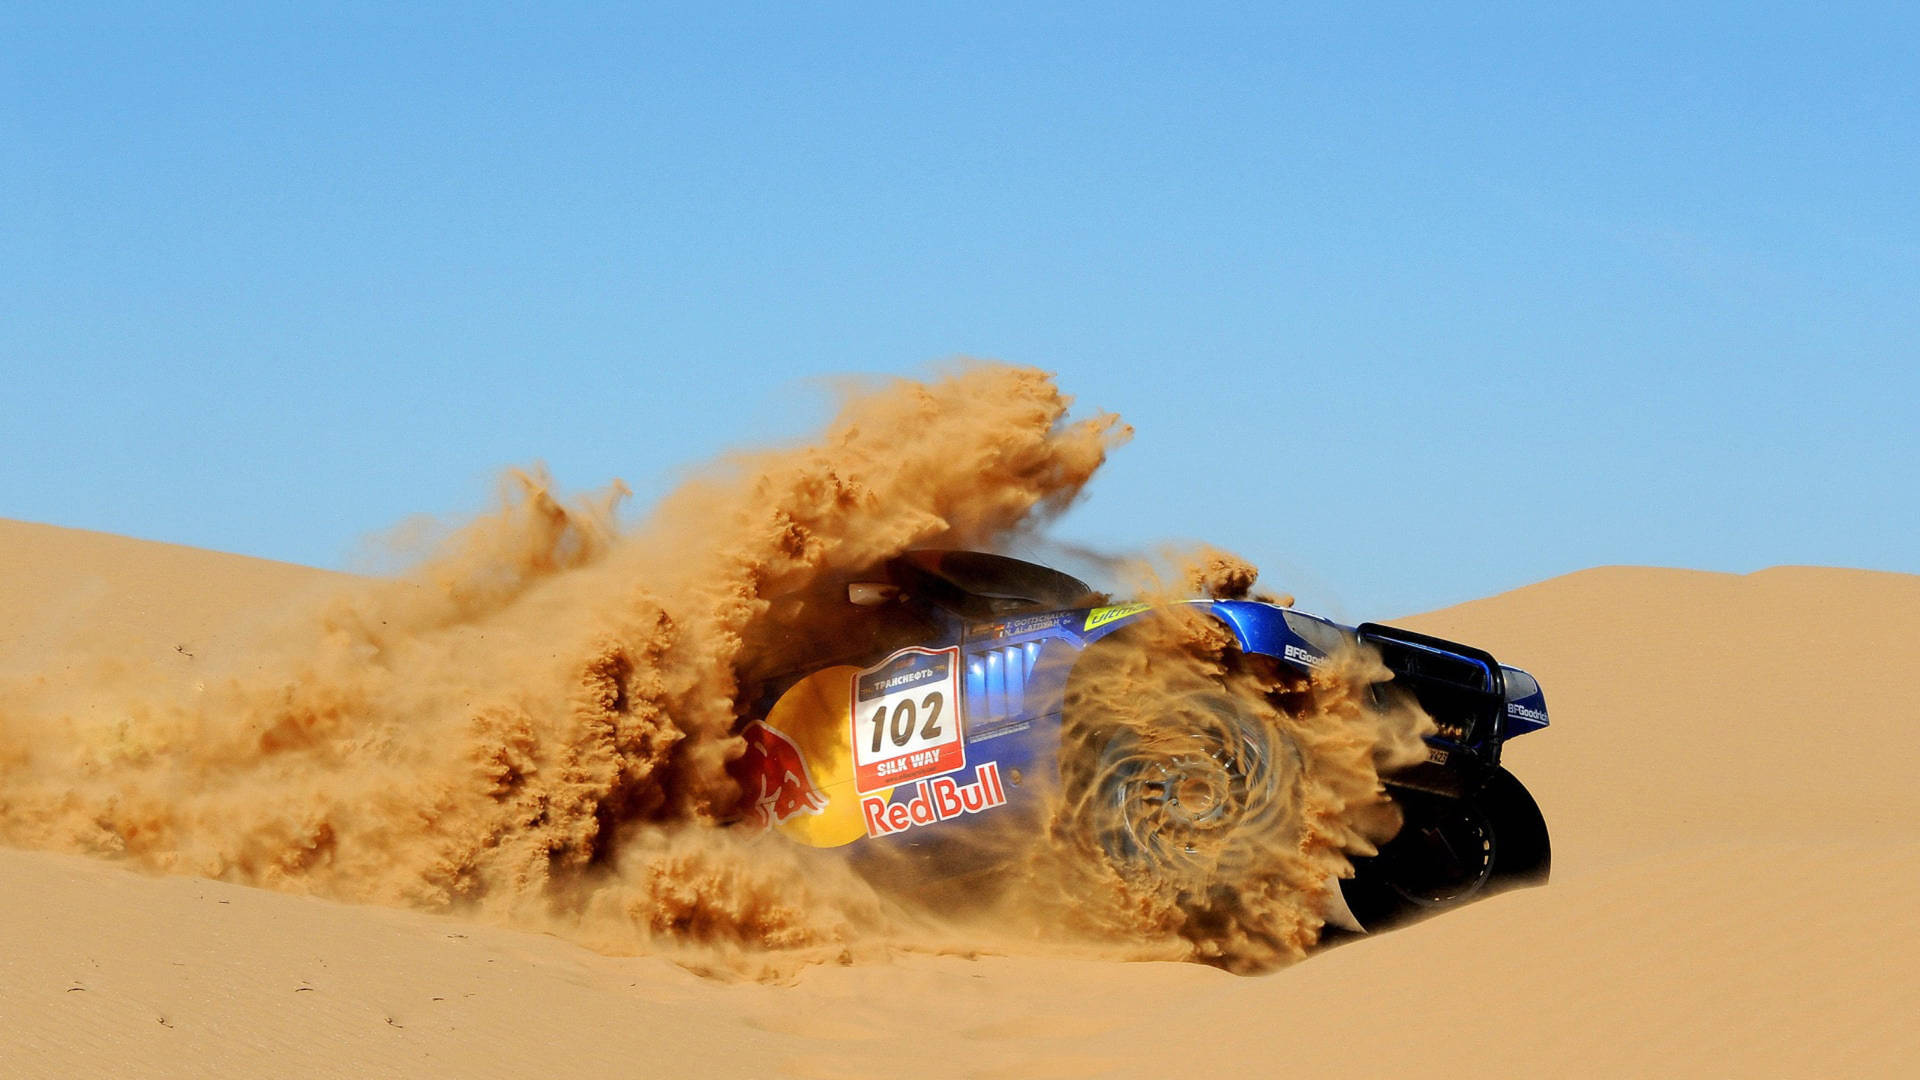 Red Bull Racing Car In Desert Background